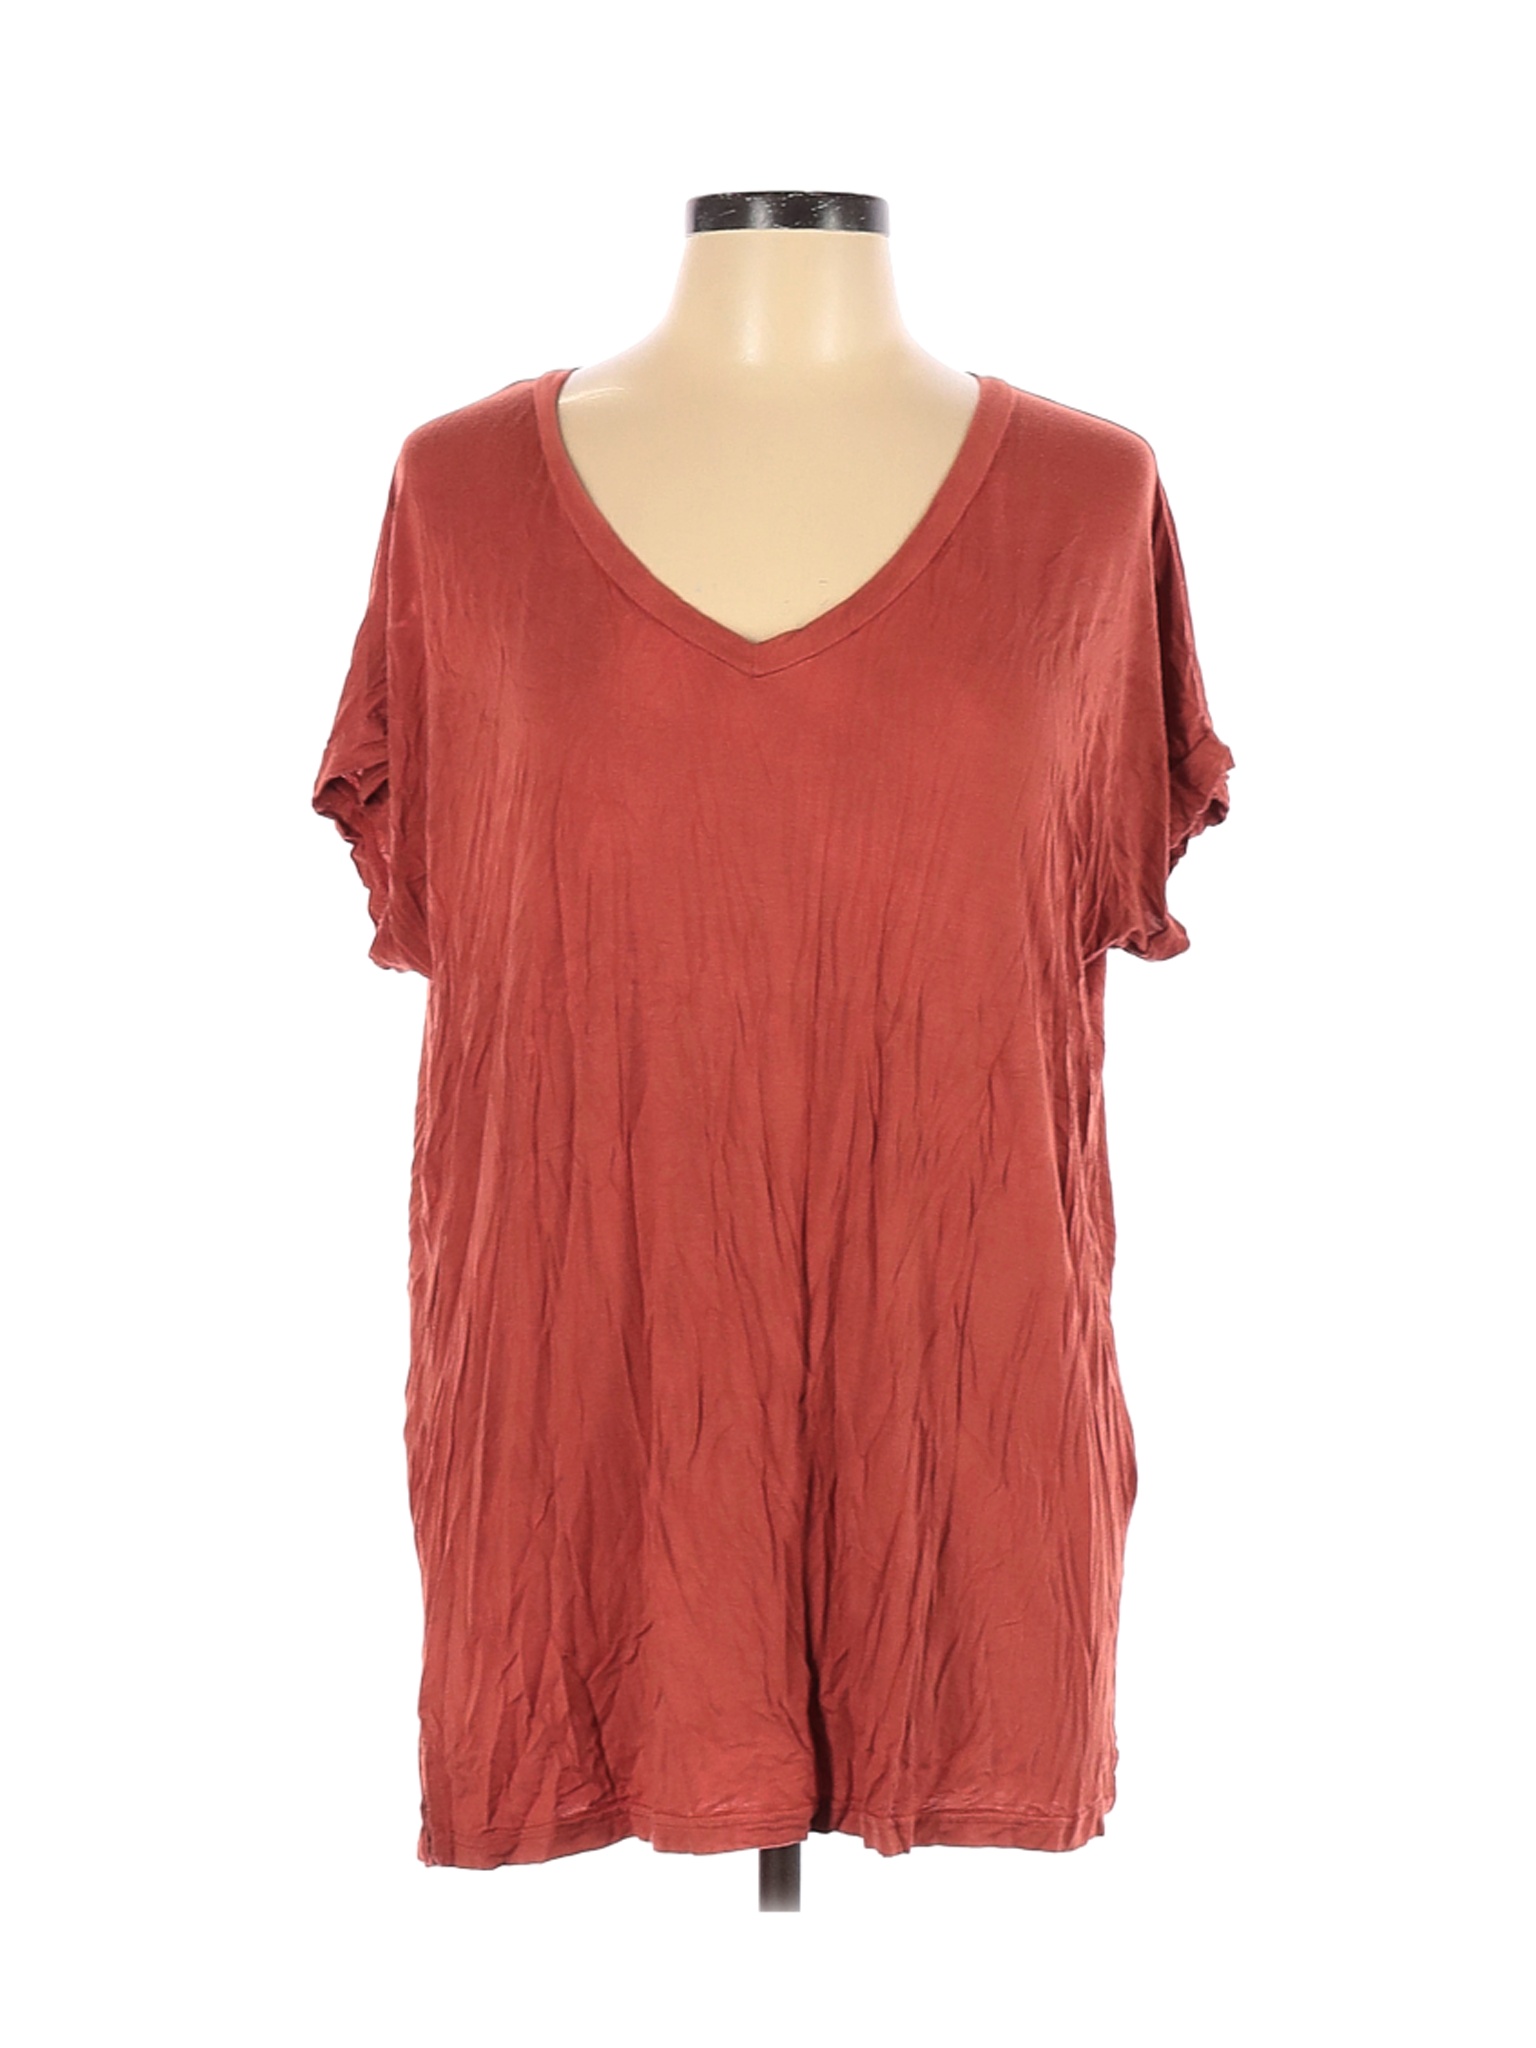 Simple Women Brown Short Sleeve T-Shirt L | eBay